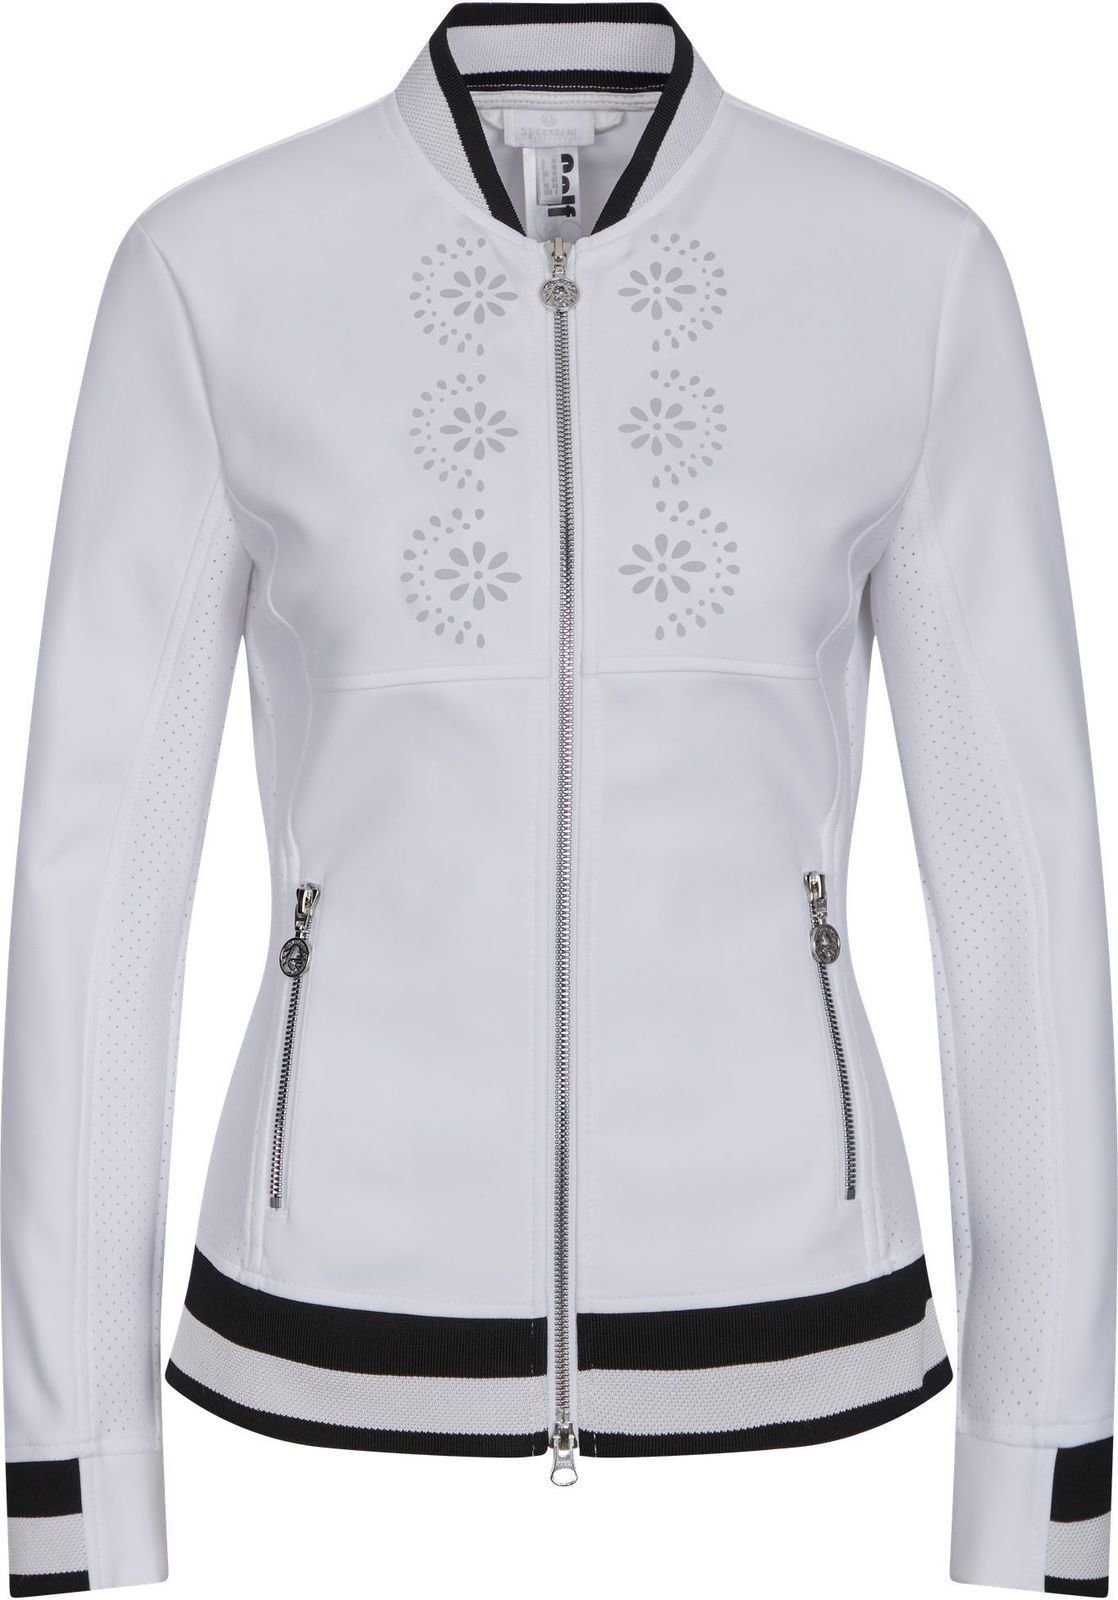 Mπουφάν Sportalm Beauty Womens Jacket Optical White 34